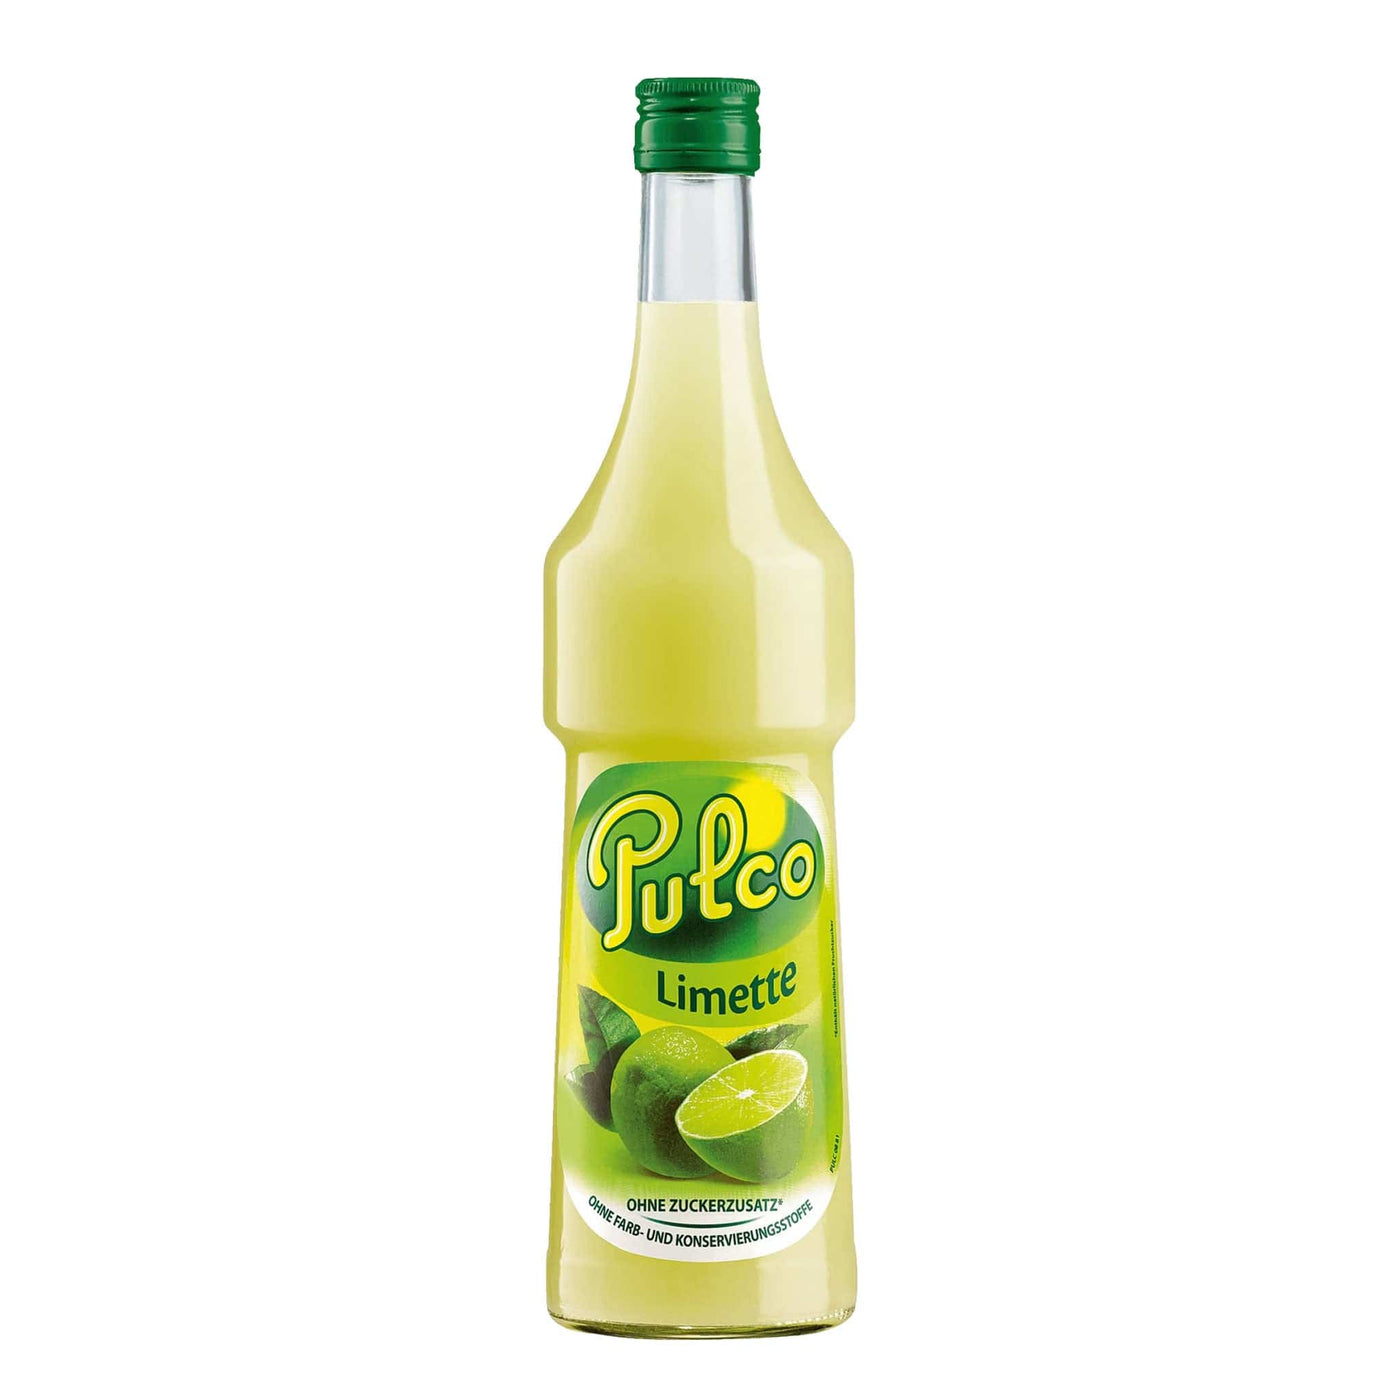 Pulco Limette Lime Juice - Spiritly